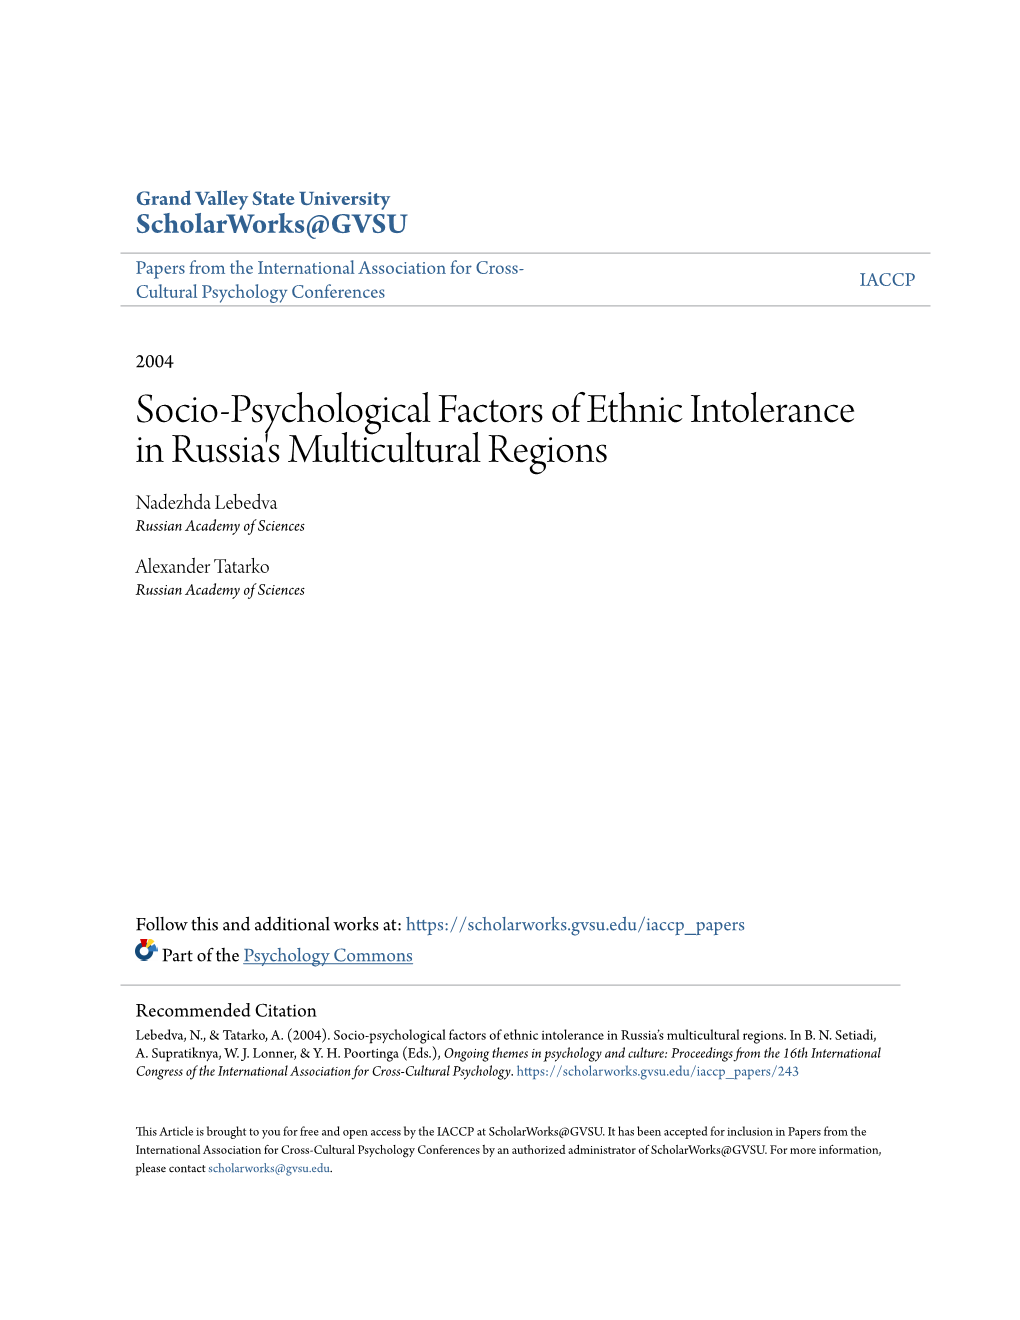 Socio-Psychological Factors of Ethnic Intolerance in Russia's Multicultural Regions Nadezhda Lebedva Russian Academy of Sciences